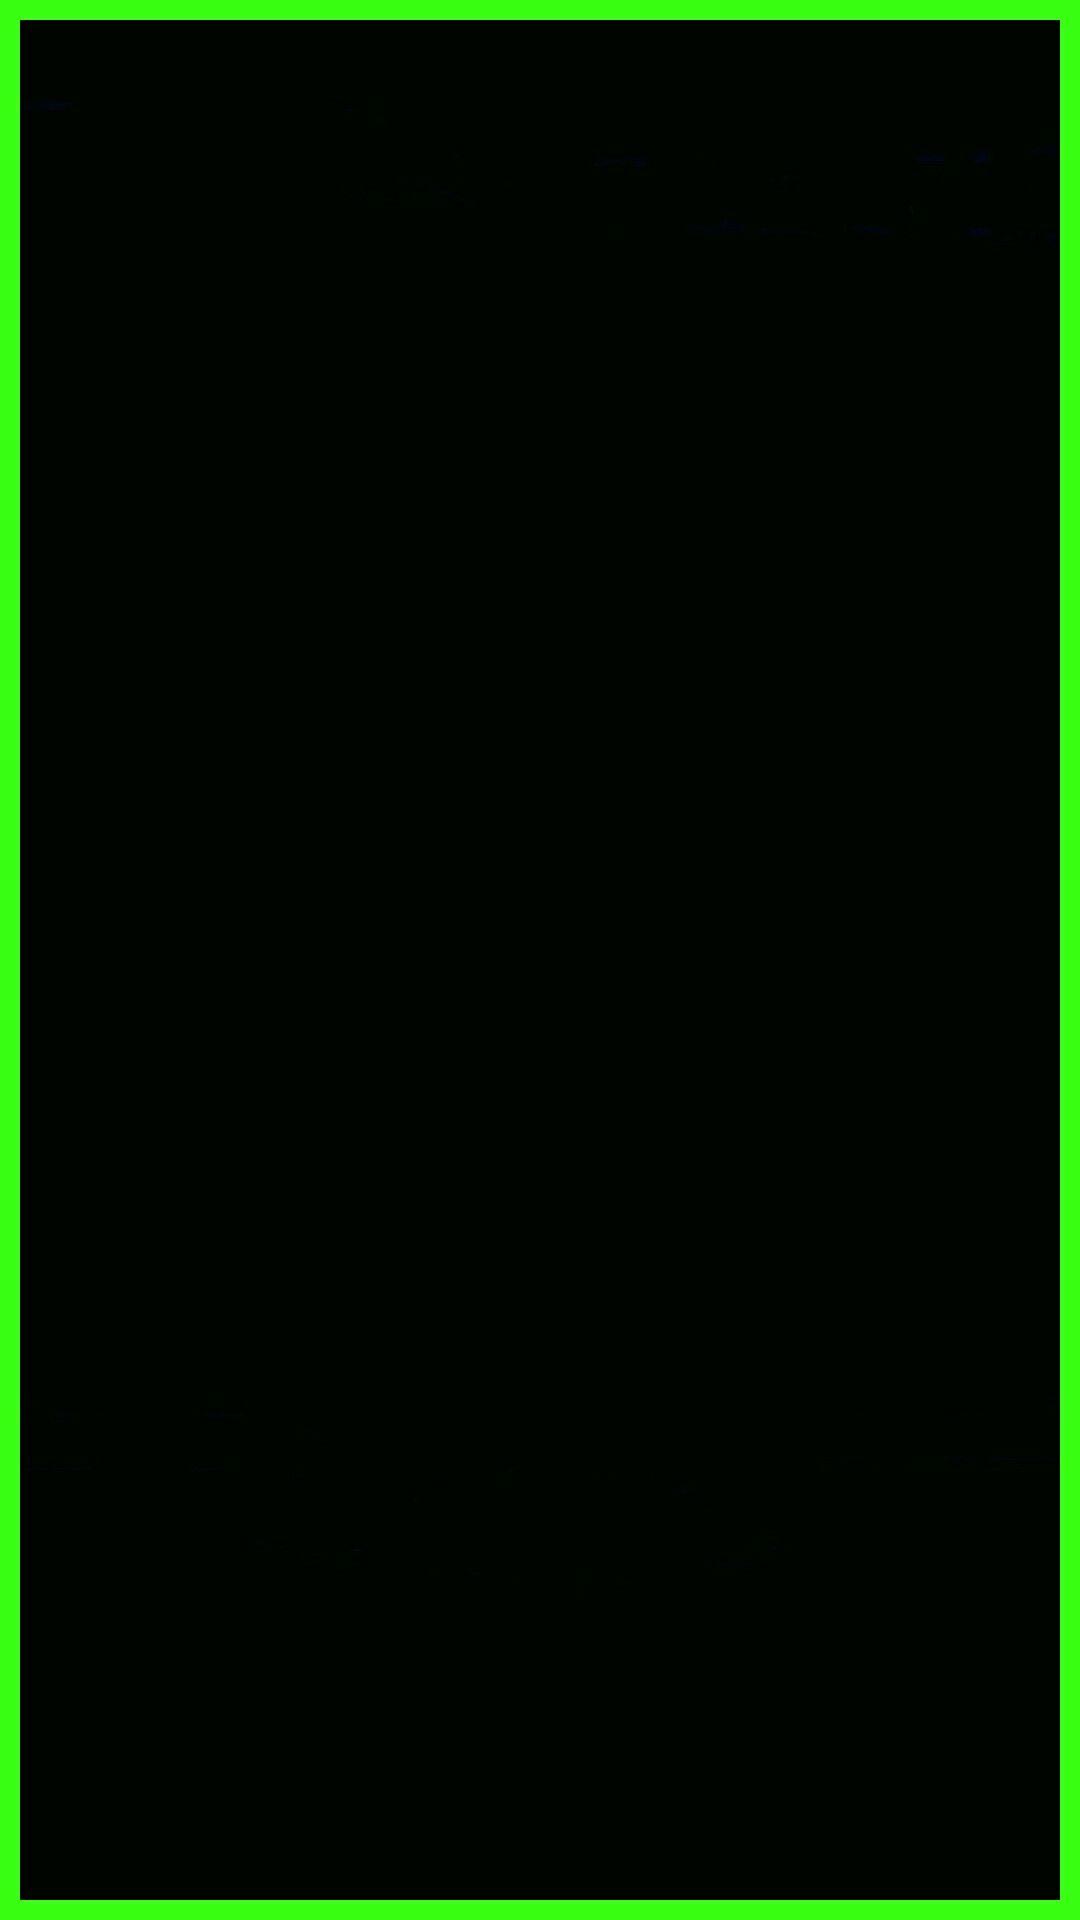 Neon Green Border Wallpaper. *Black Wallpaper. Logos